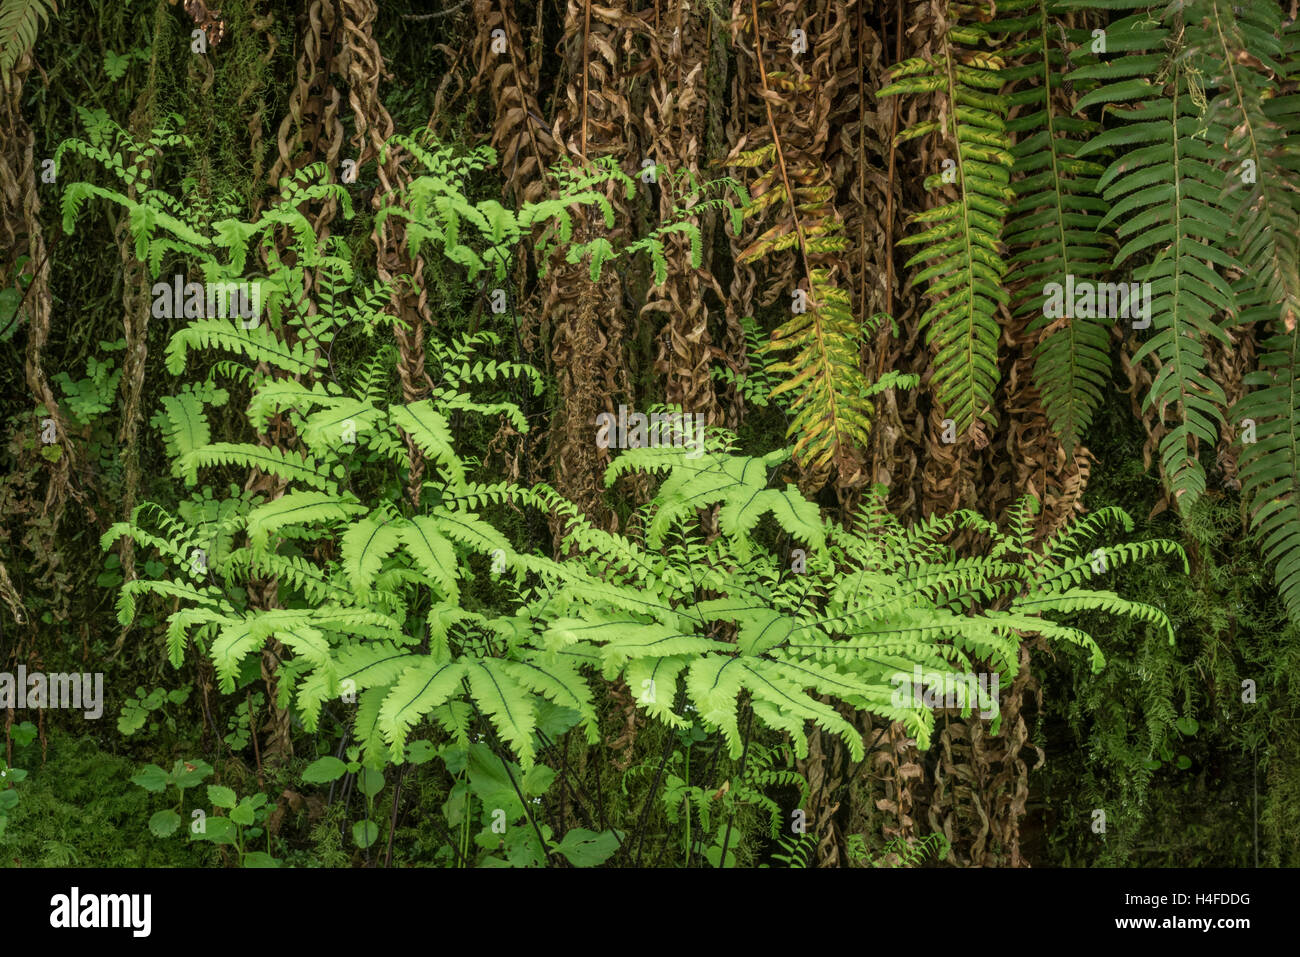 Maidenhair ferns and sword ferns, Elliott State Forest, Coast Range Mountains, Oregon. Stock Photo